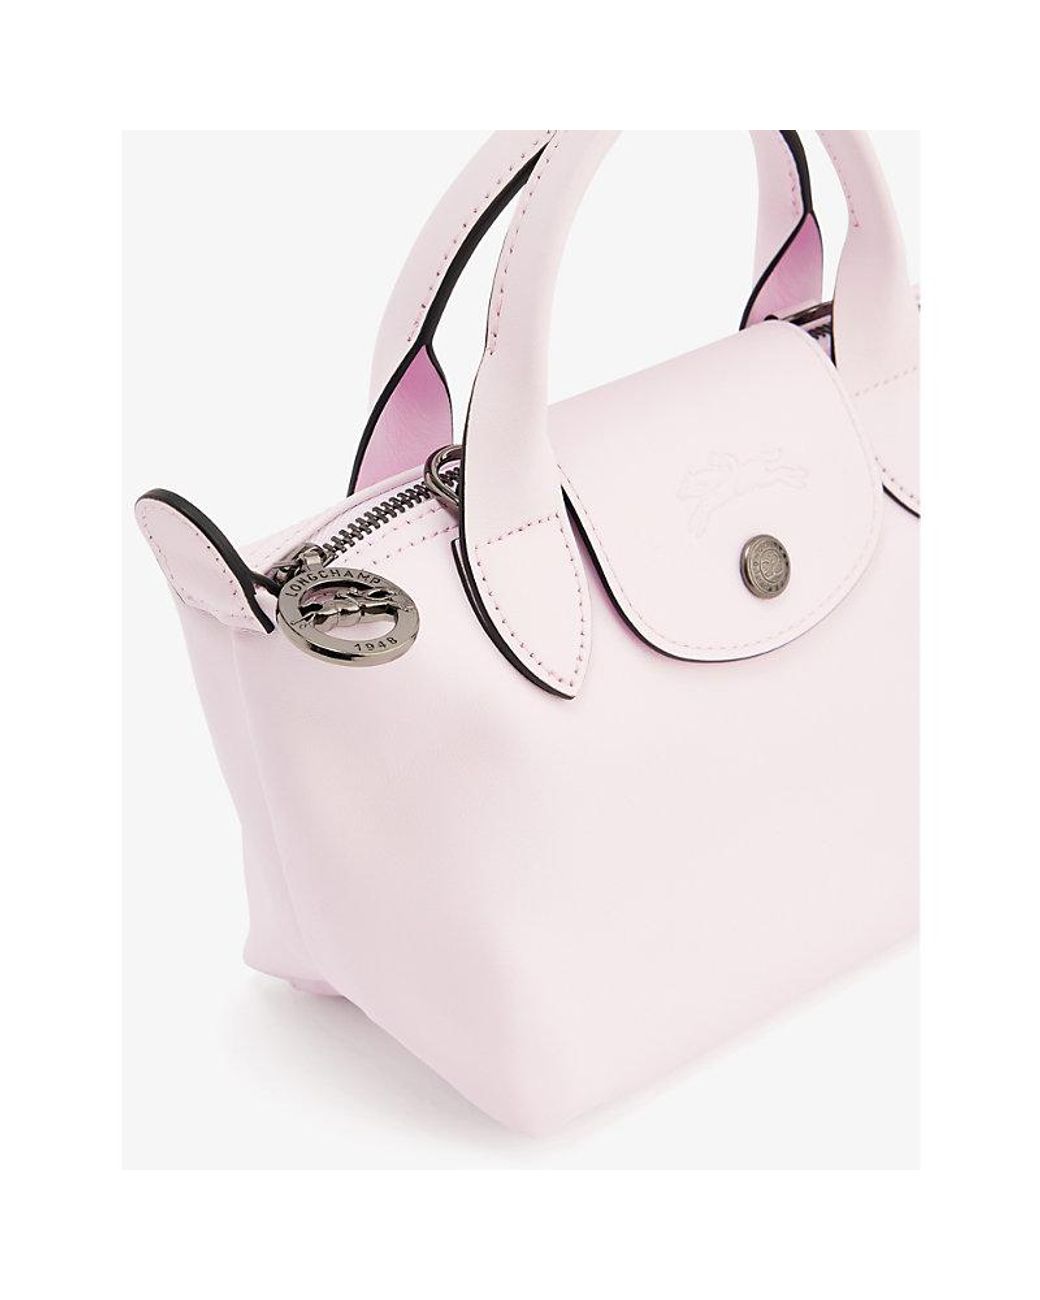 Longchamp Women's Leather Hobo Bag Petal Pink